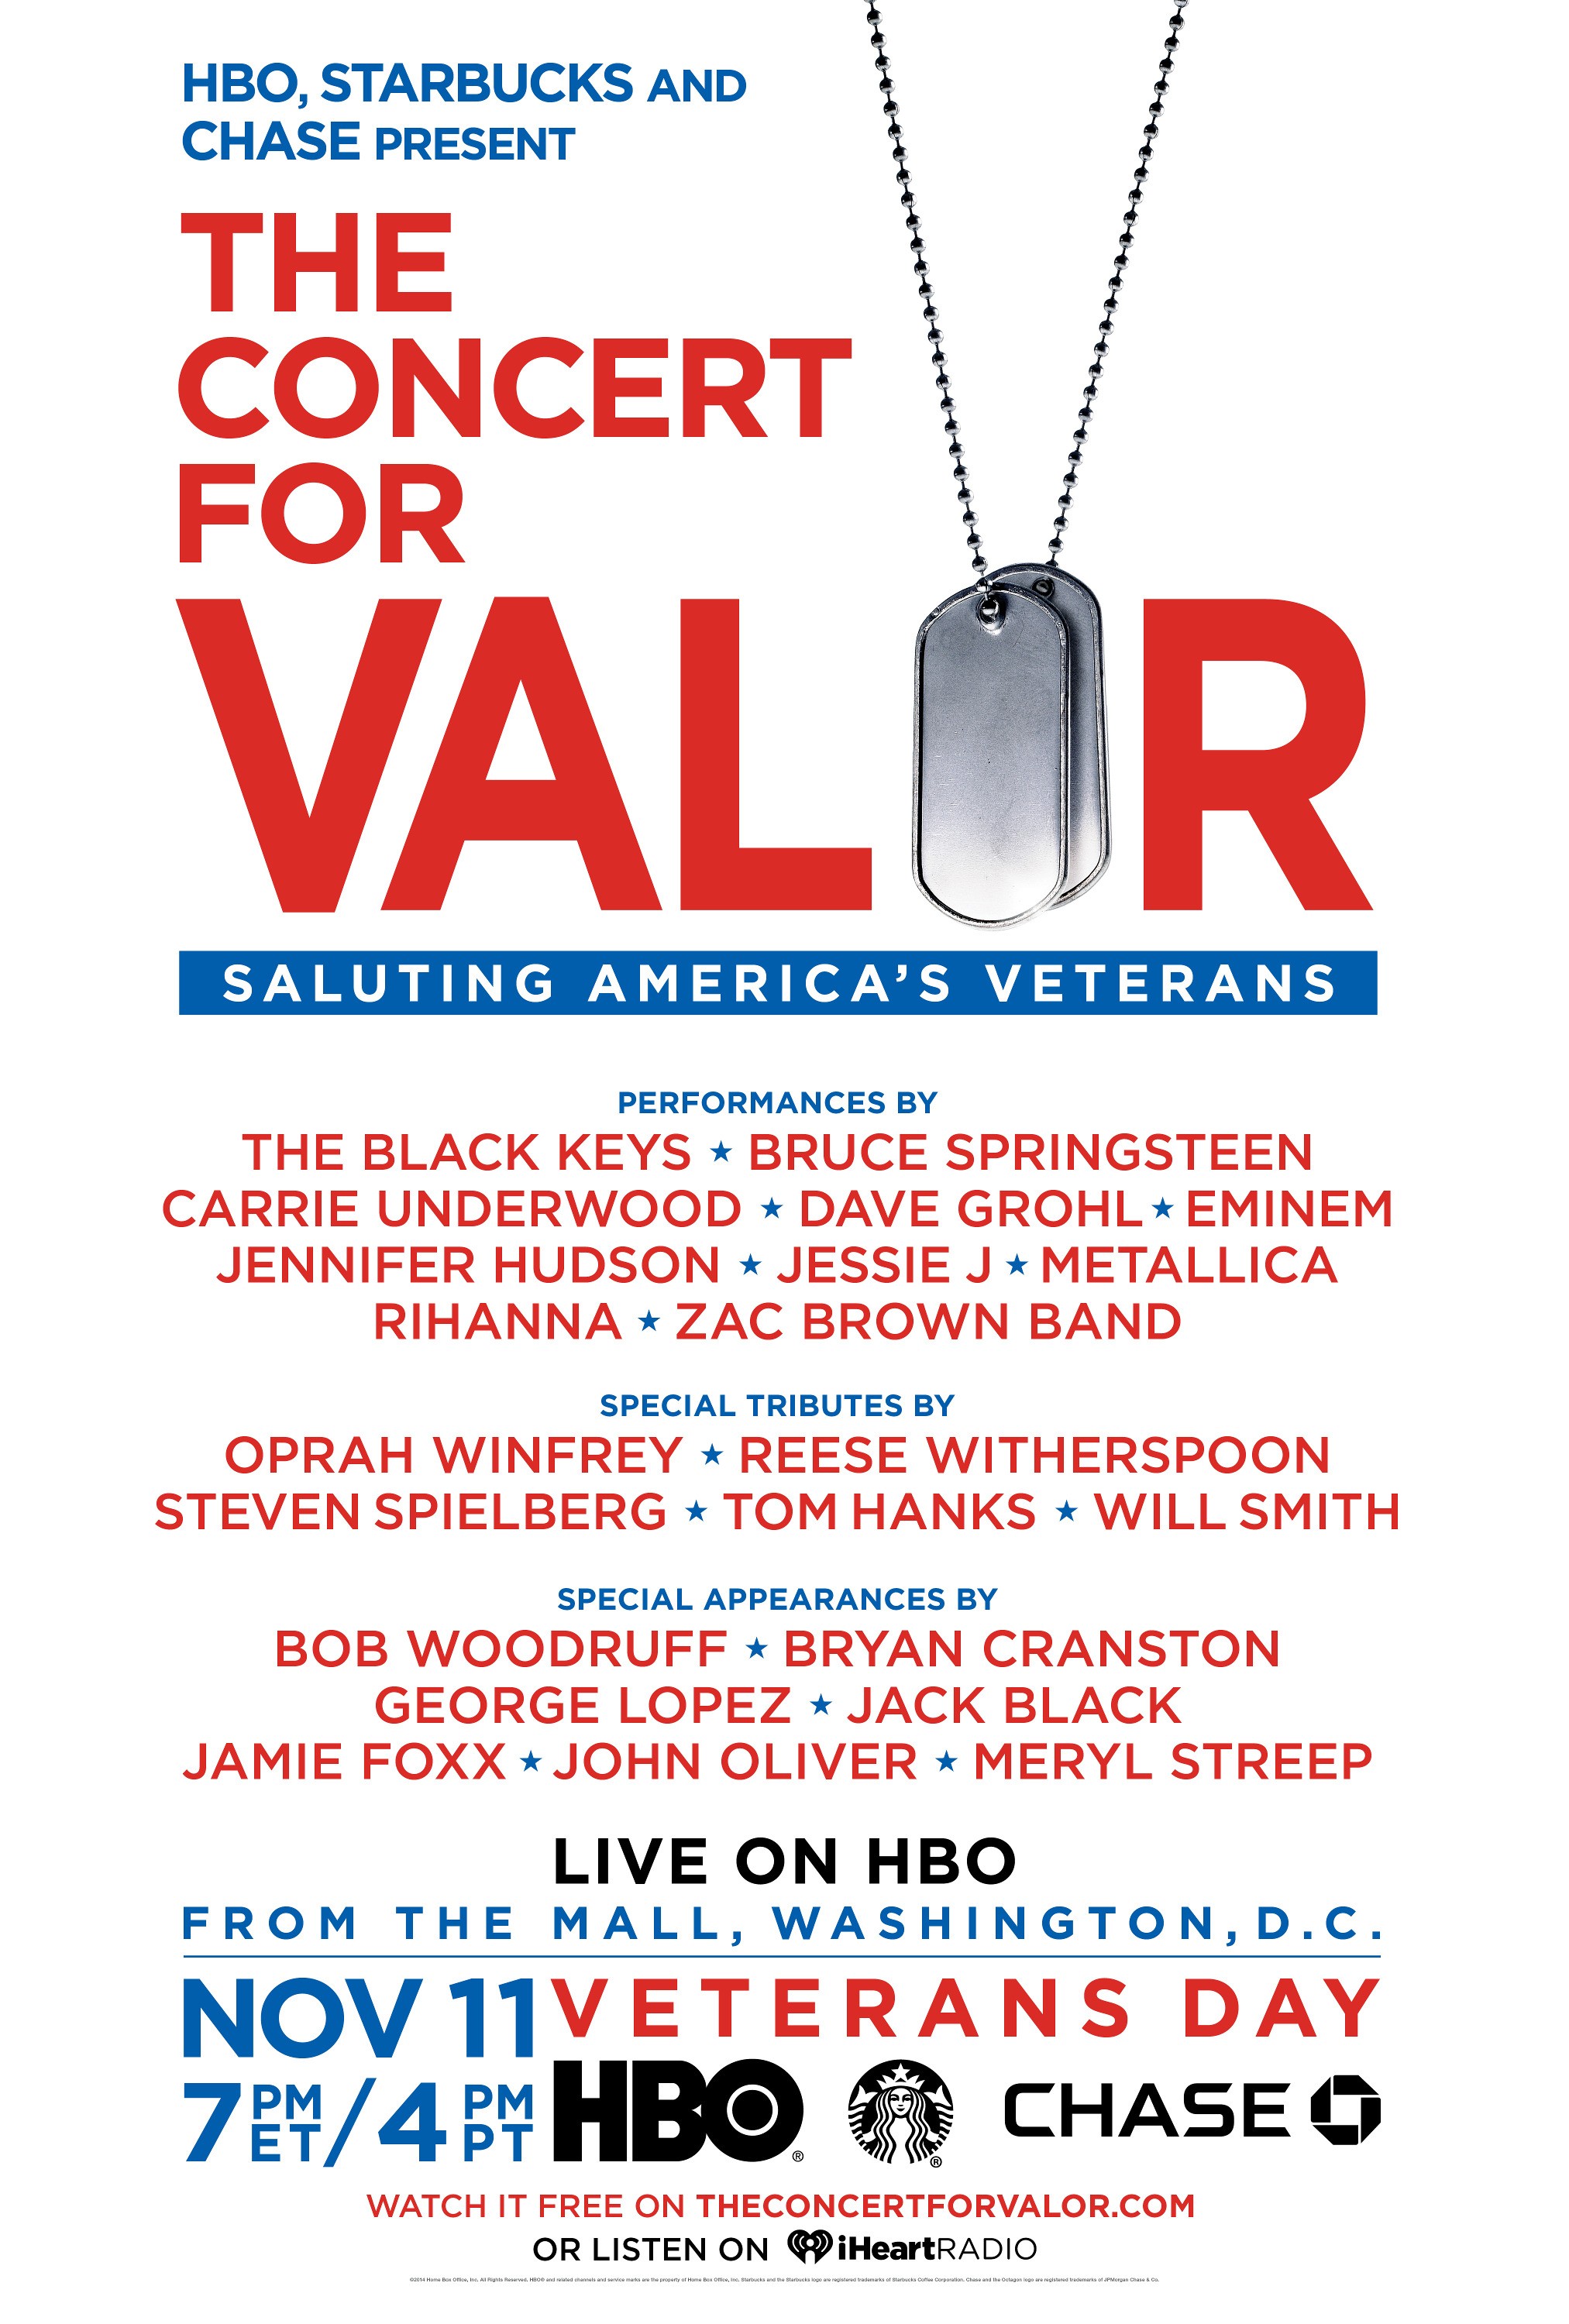 Mega Sized TV Poster Image for The Concert for Valor 